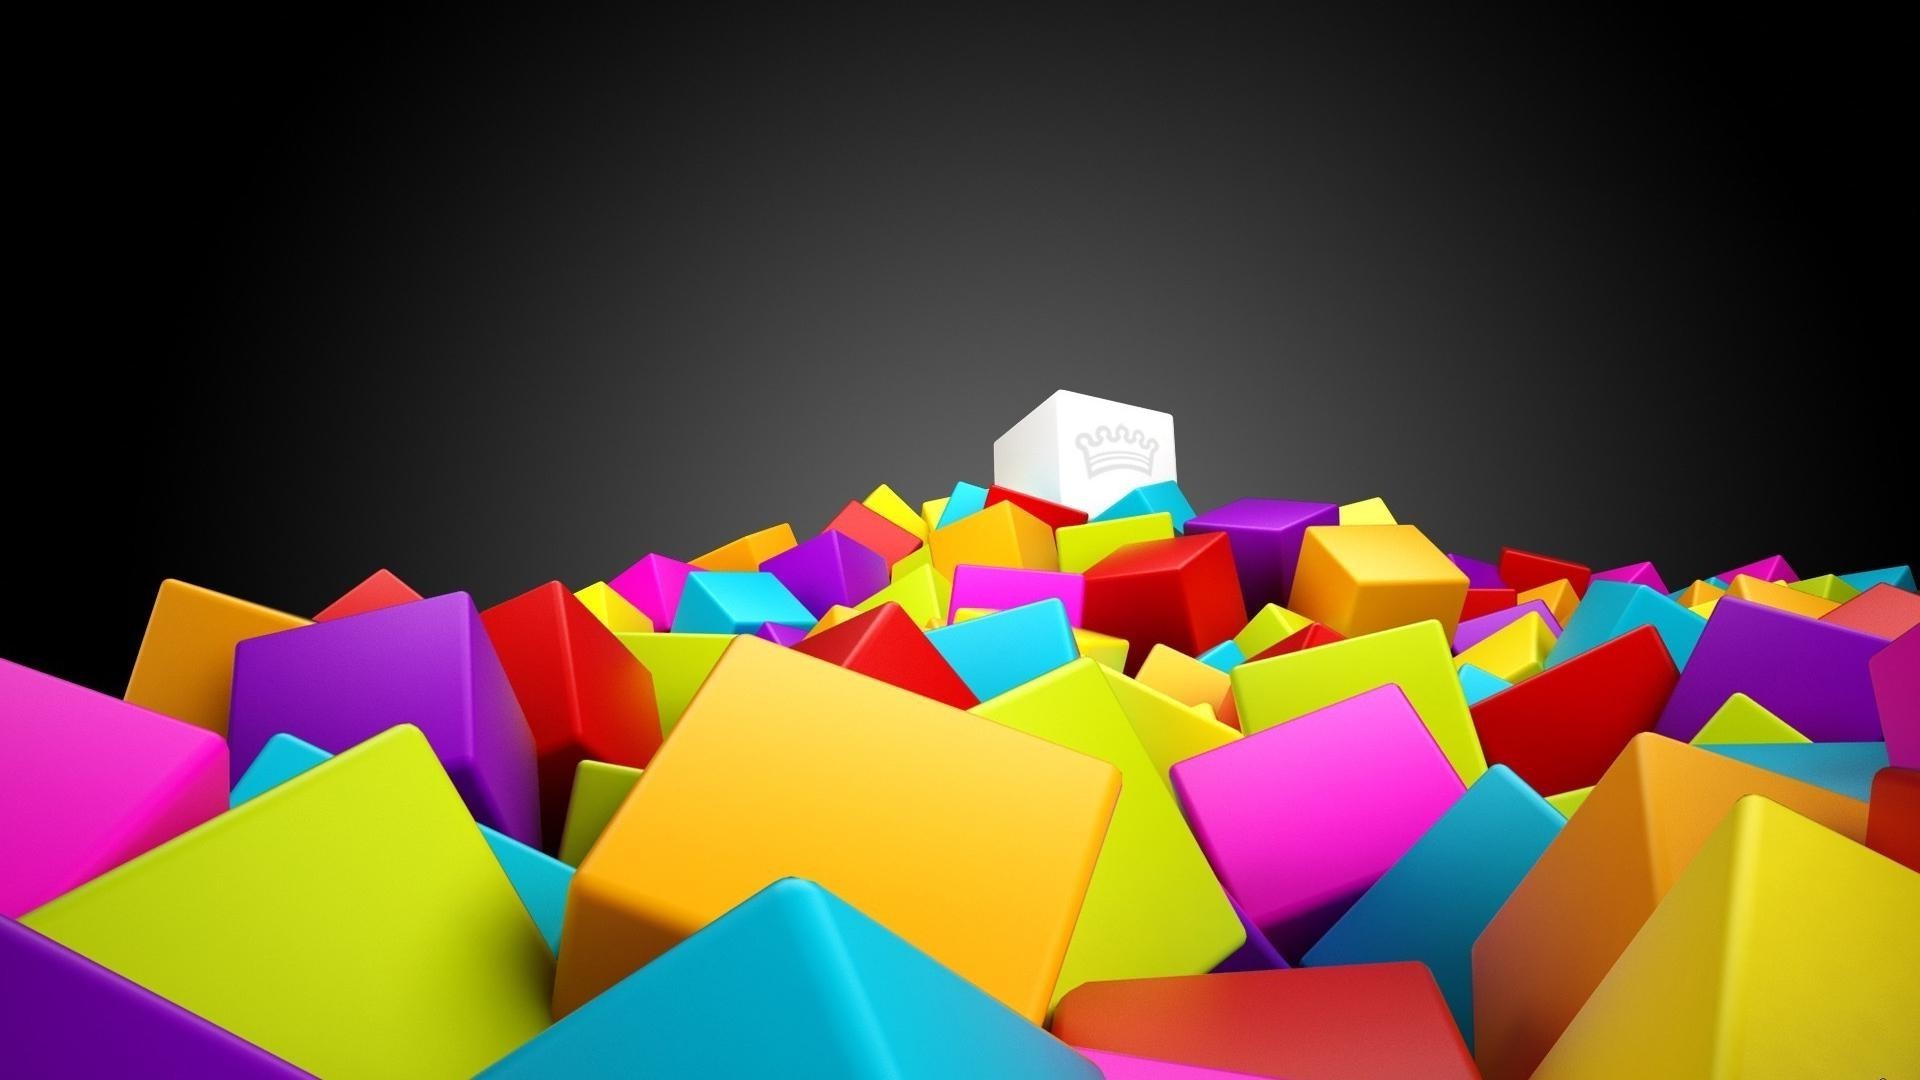 geometric shapes motley geometric bright creativity futuristic color abstract rainbow cube shape art